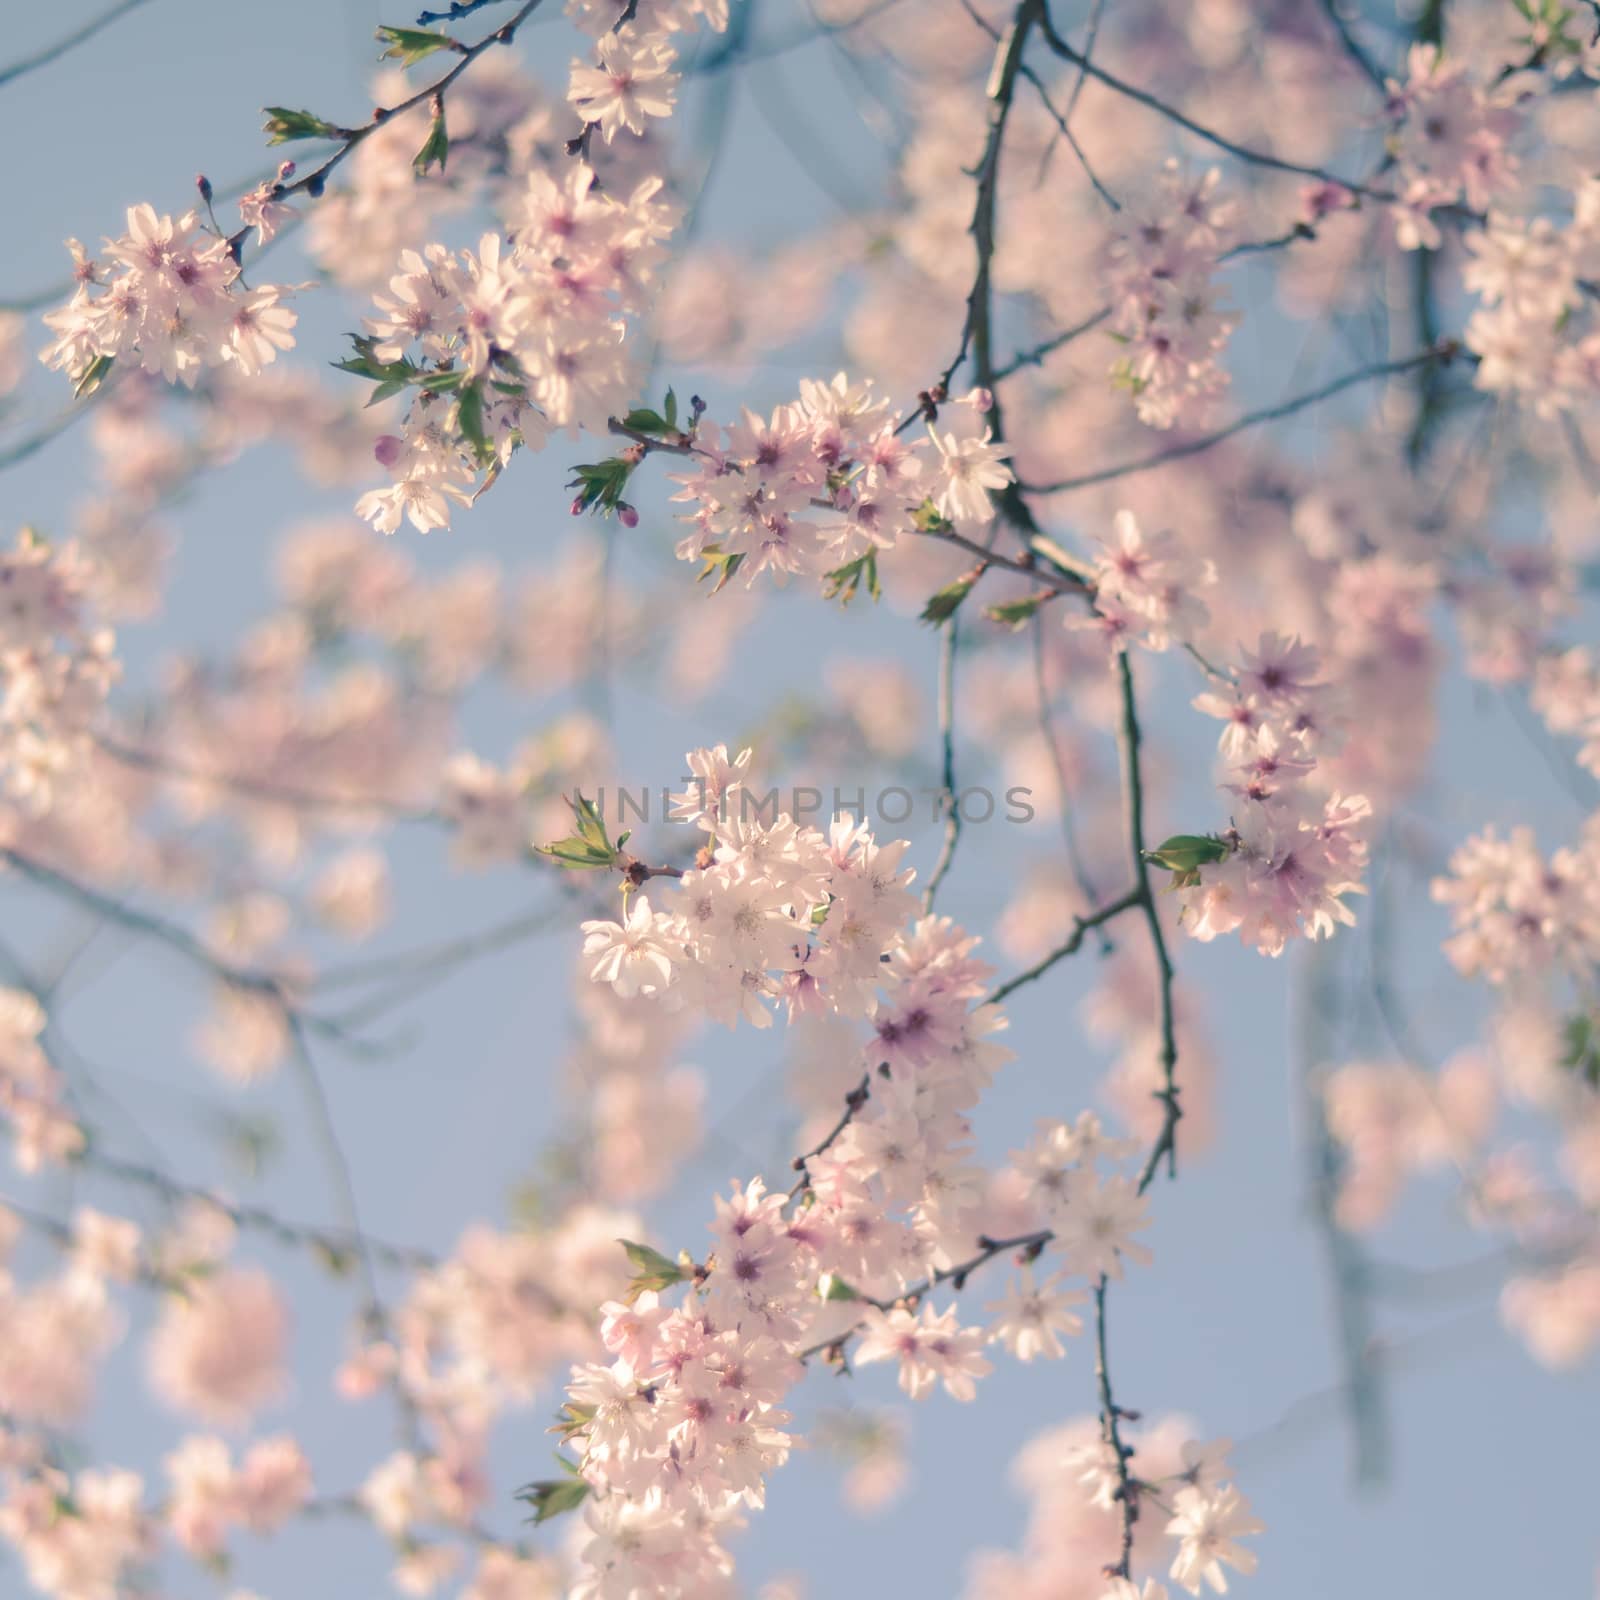 Retro Filter Cherry Blossom by mrdoomits